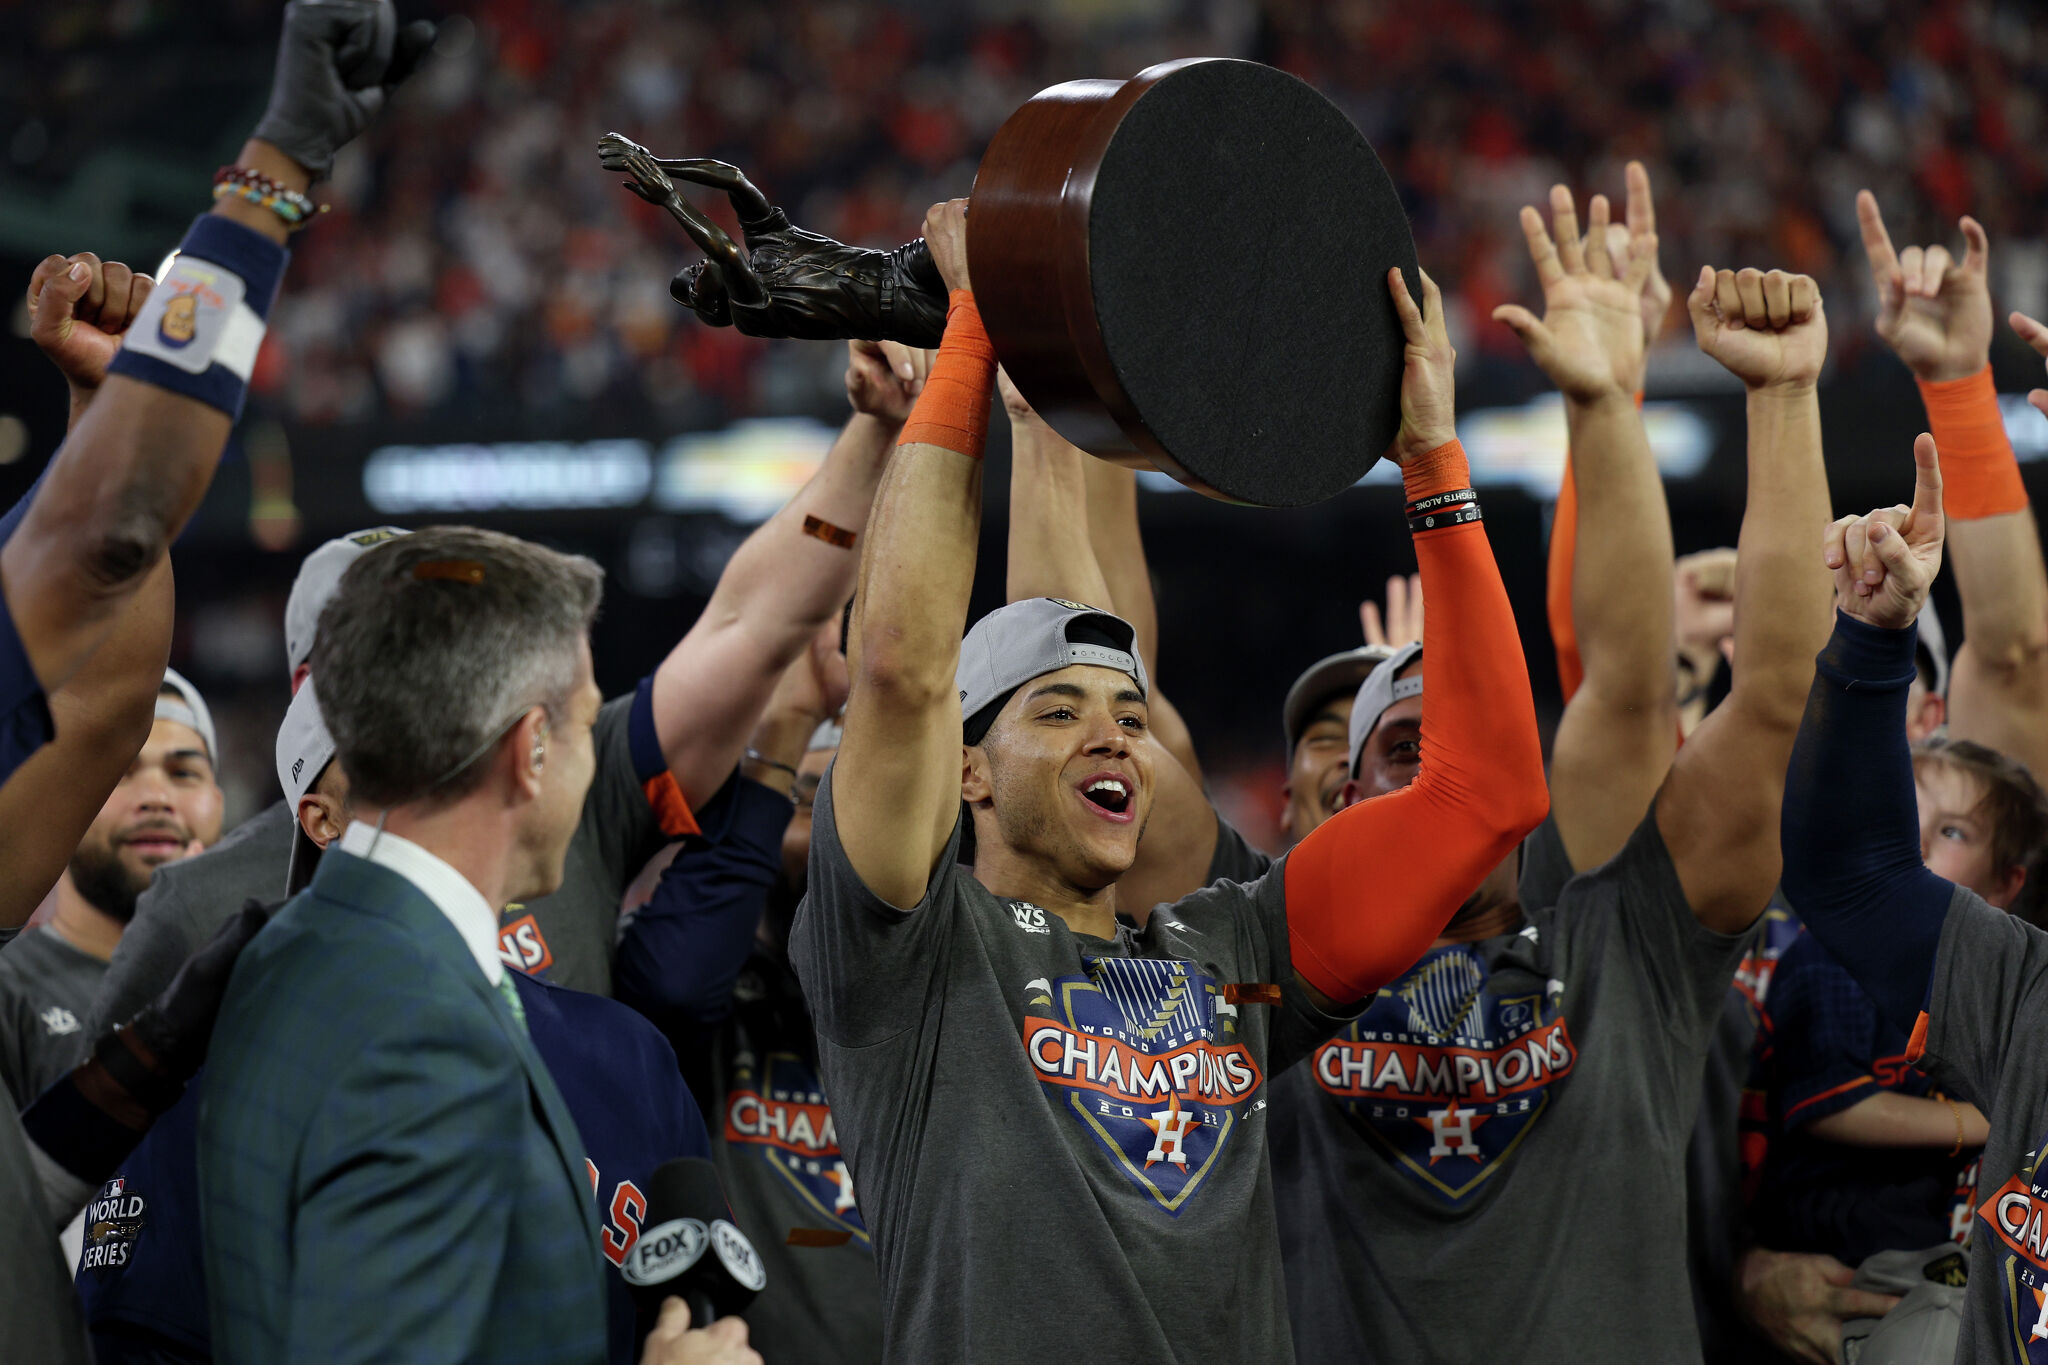 2022 World Series Champions Houston Astros Signature Trophy T